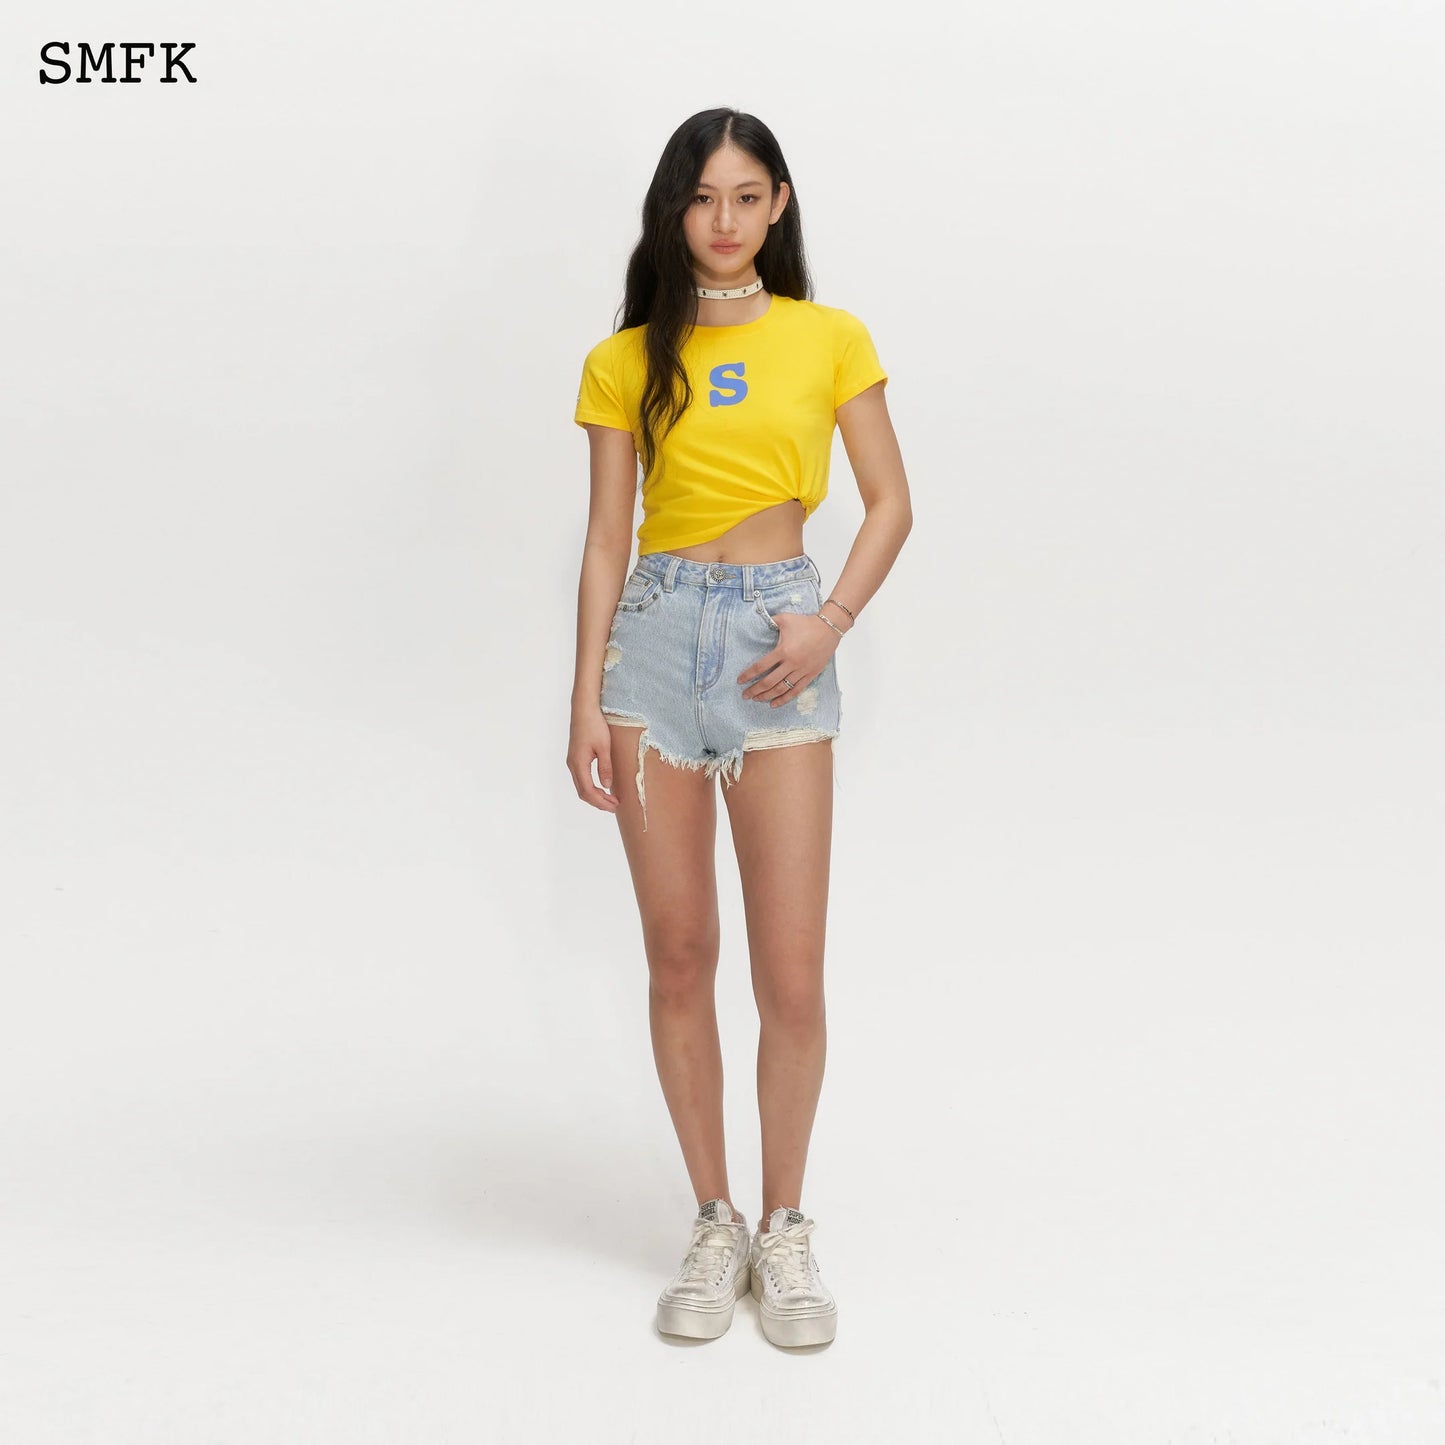 Skinny Model Yellow Tight T-shirt